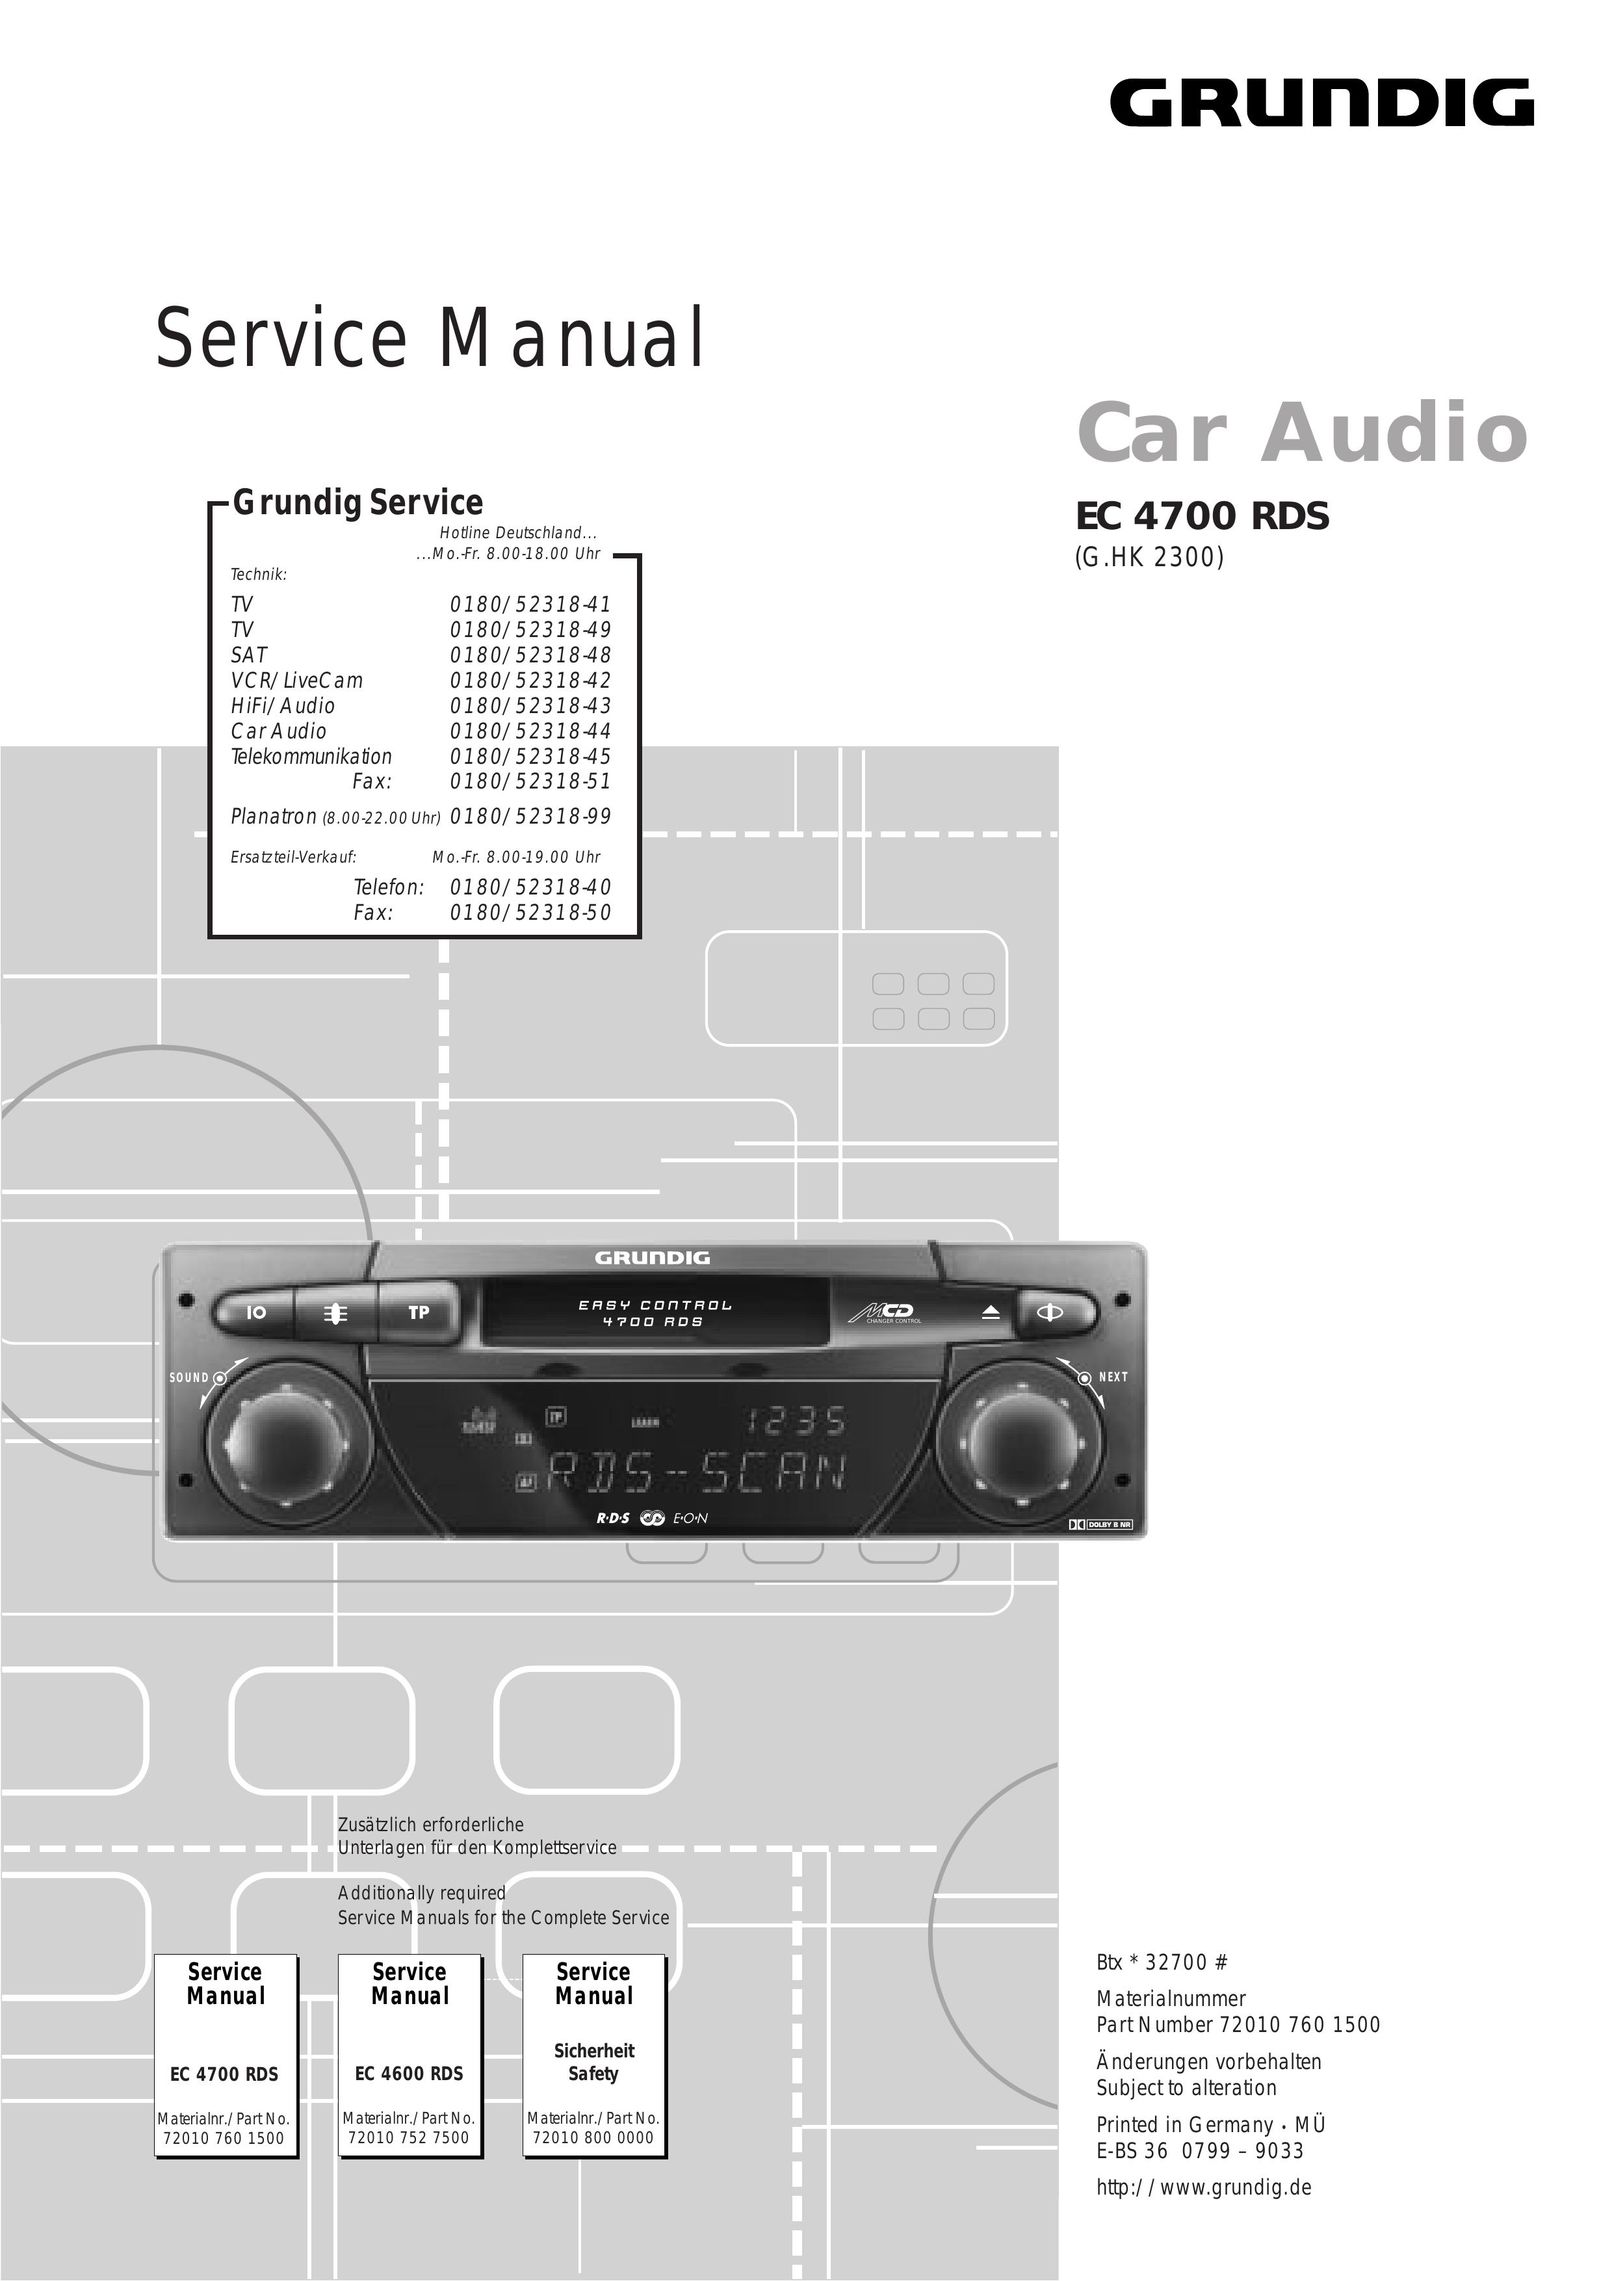 Grundig EC 4700 RDS Car Stereo System User Manual